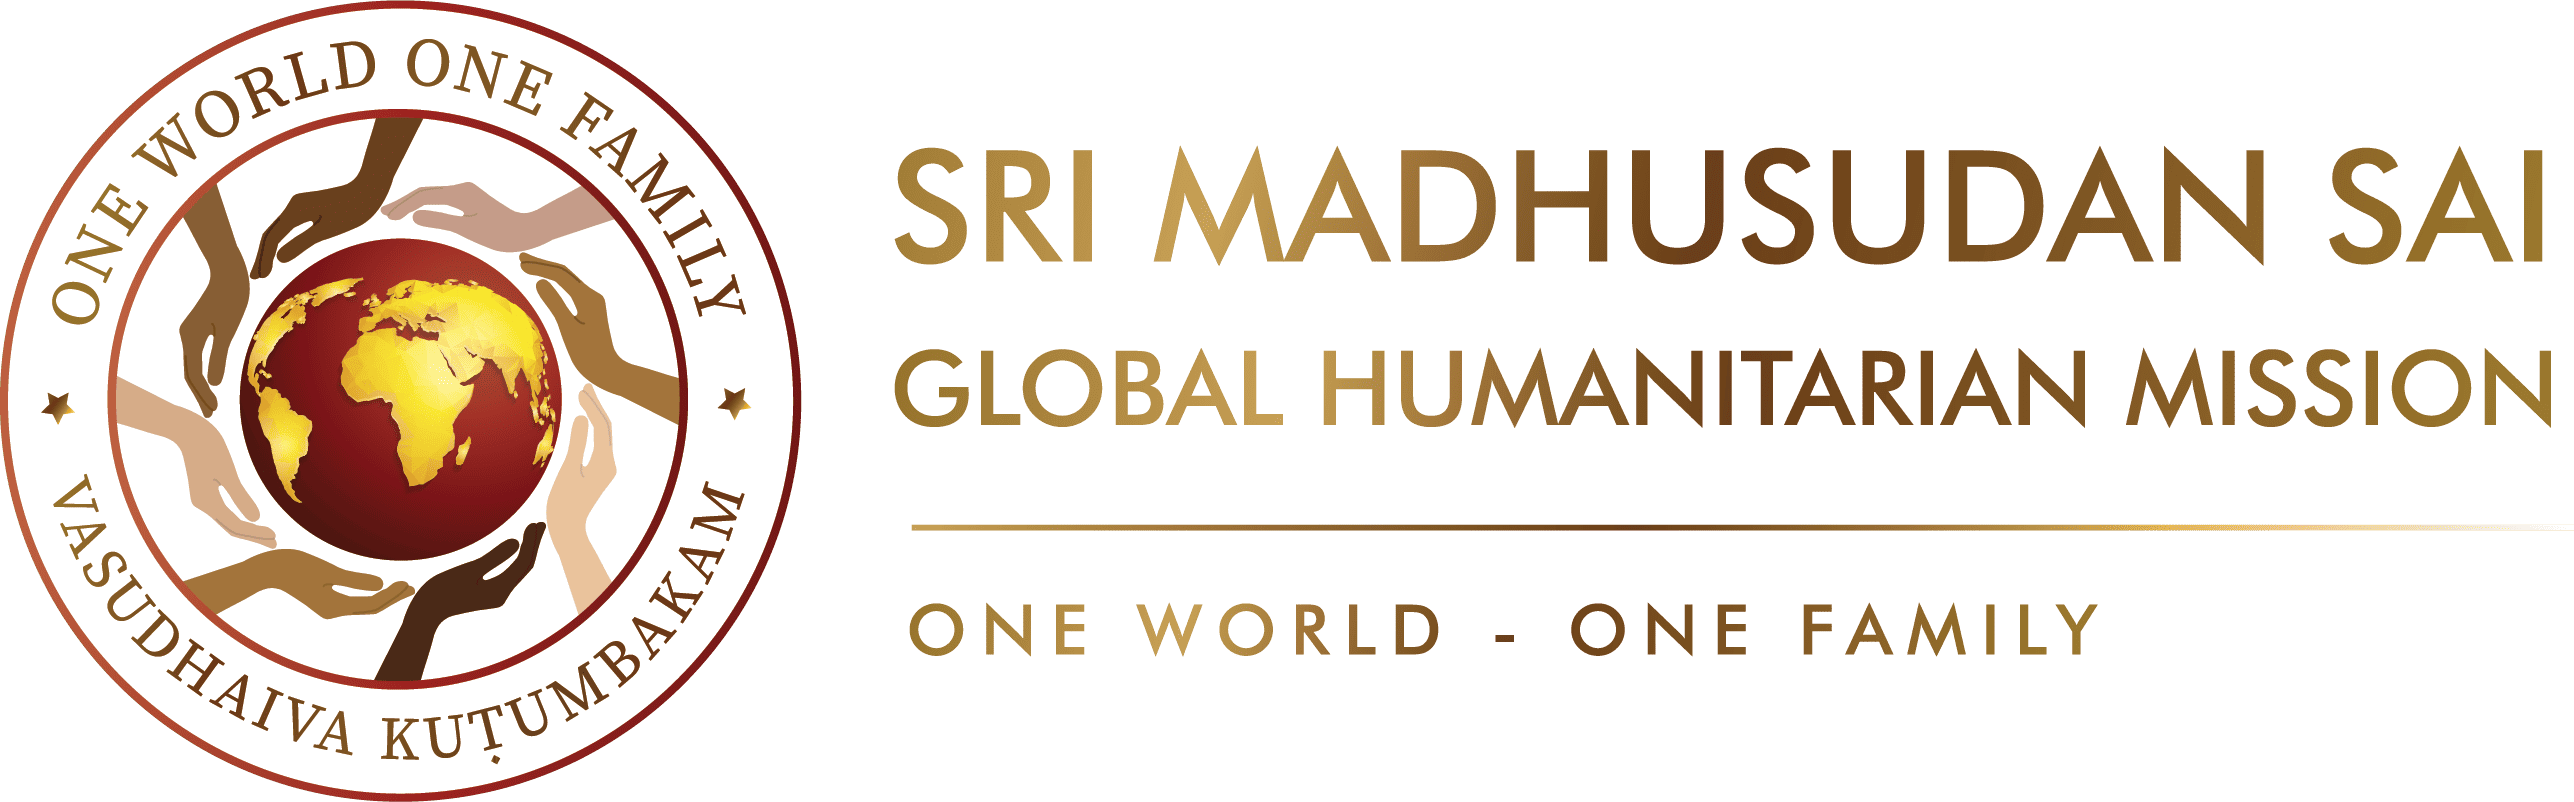 SMS Global Humanitarian Mission Logo